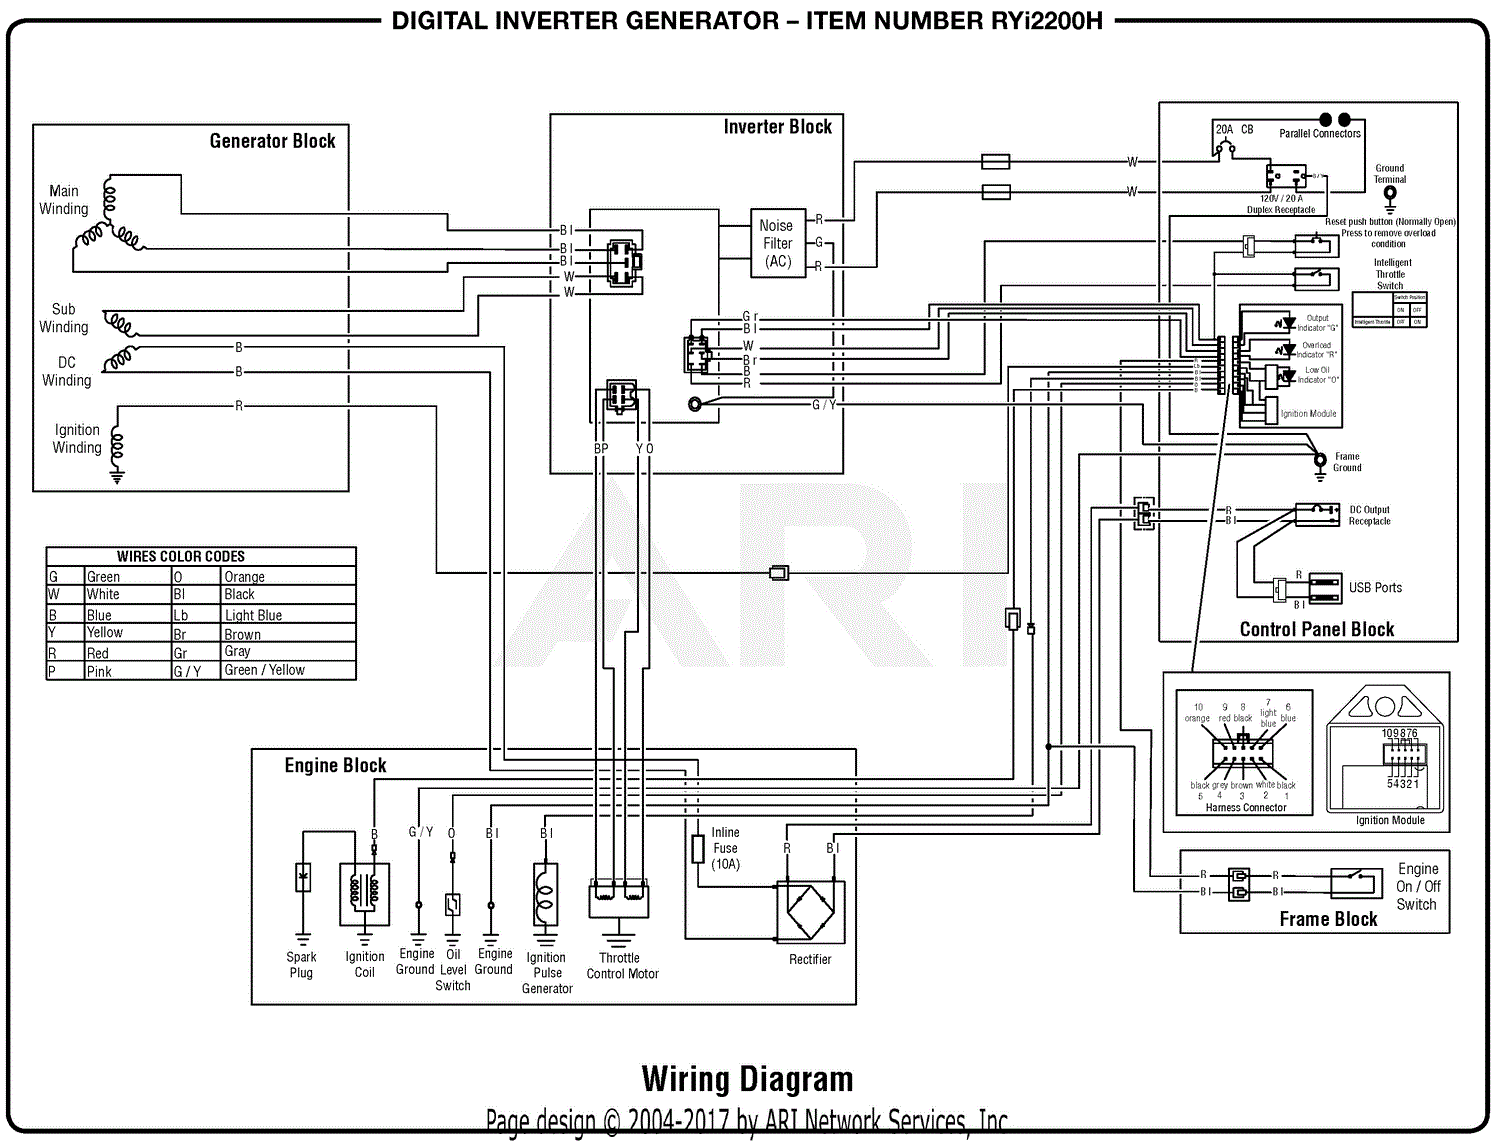 Homelite RYi2200H Digital Inverter Generator Mfg. No ... generator wiring diagram 